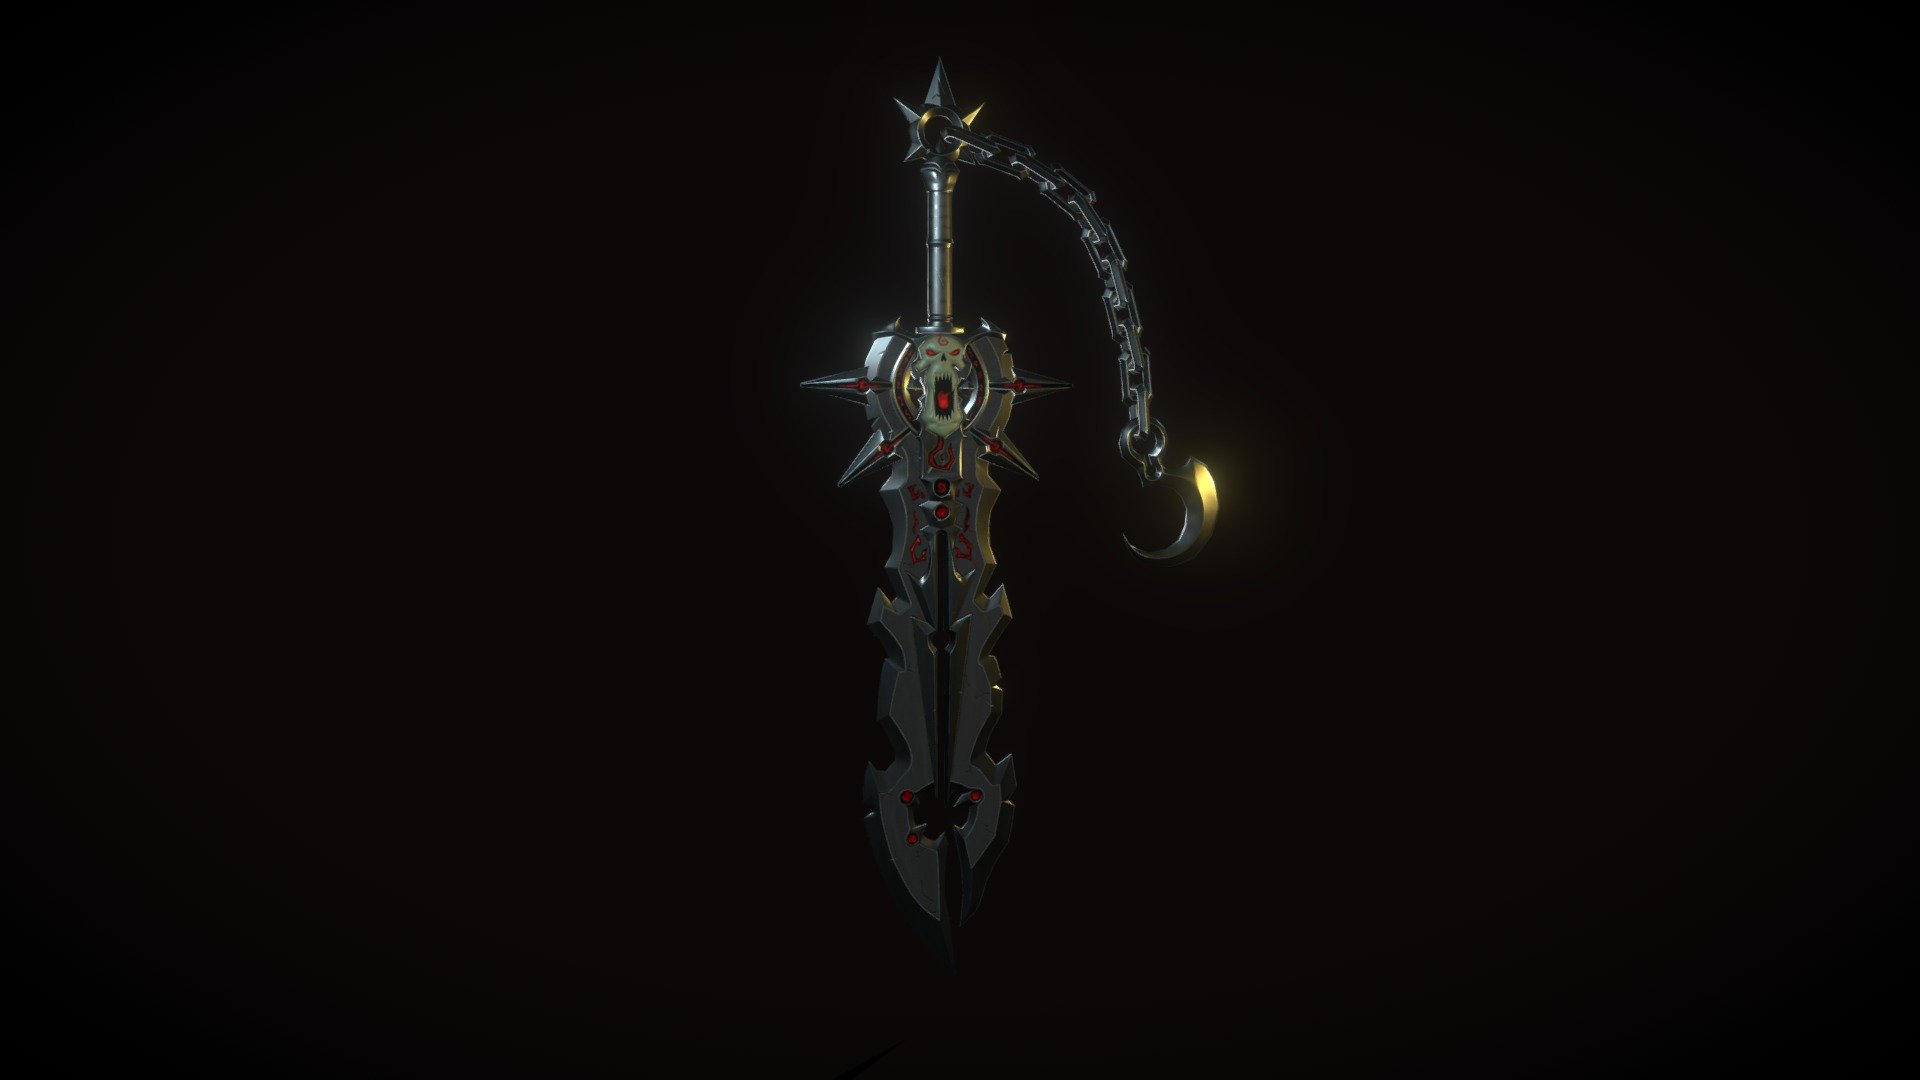 Death knight sword (fanart by Todor Hristov)